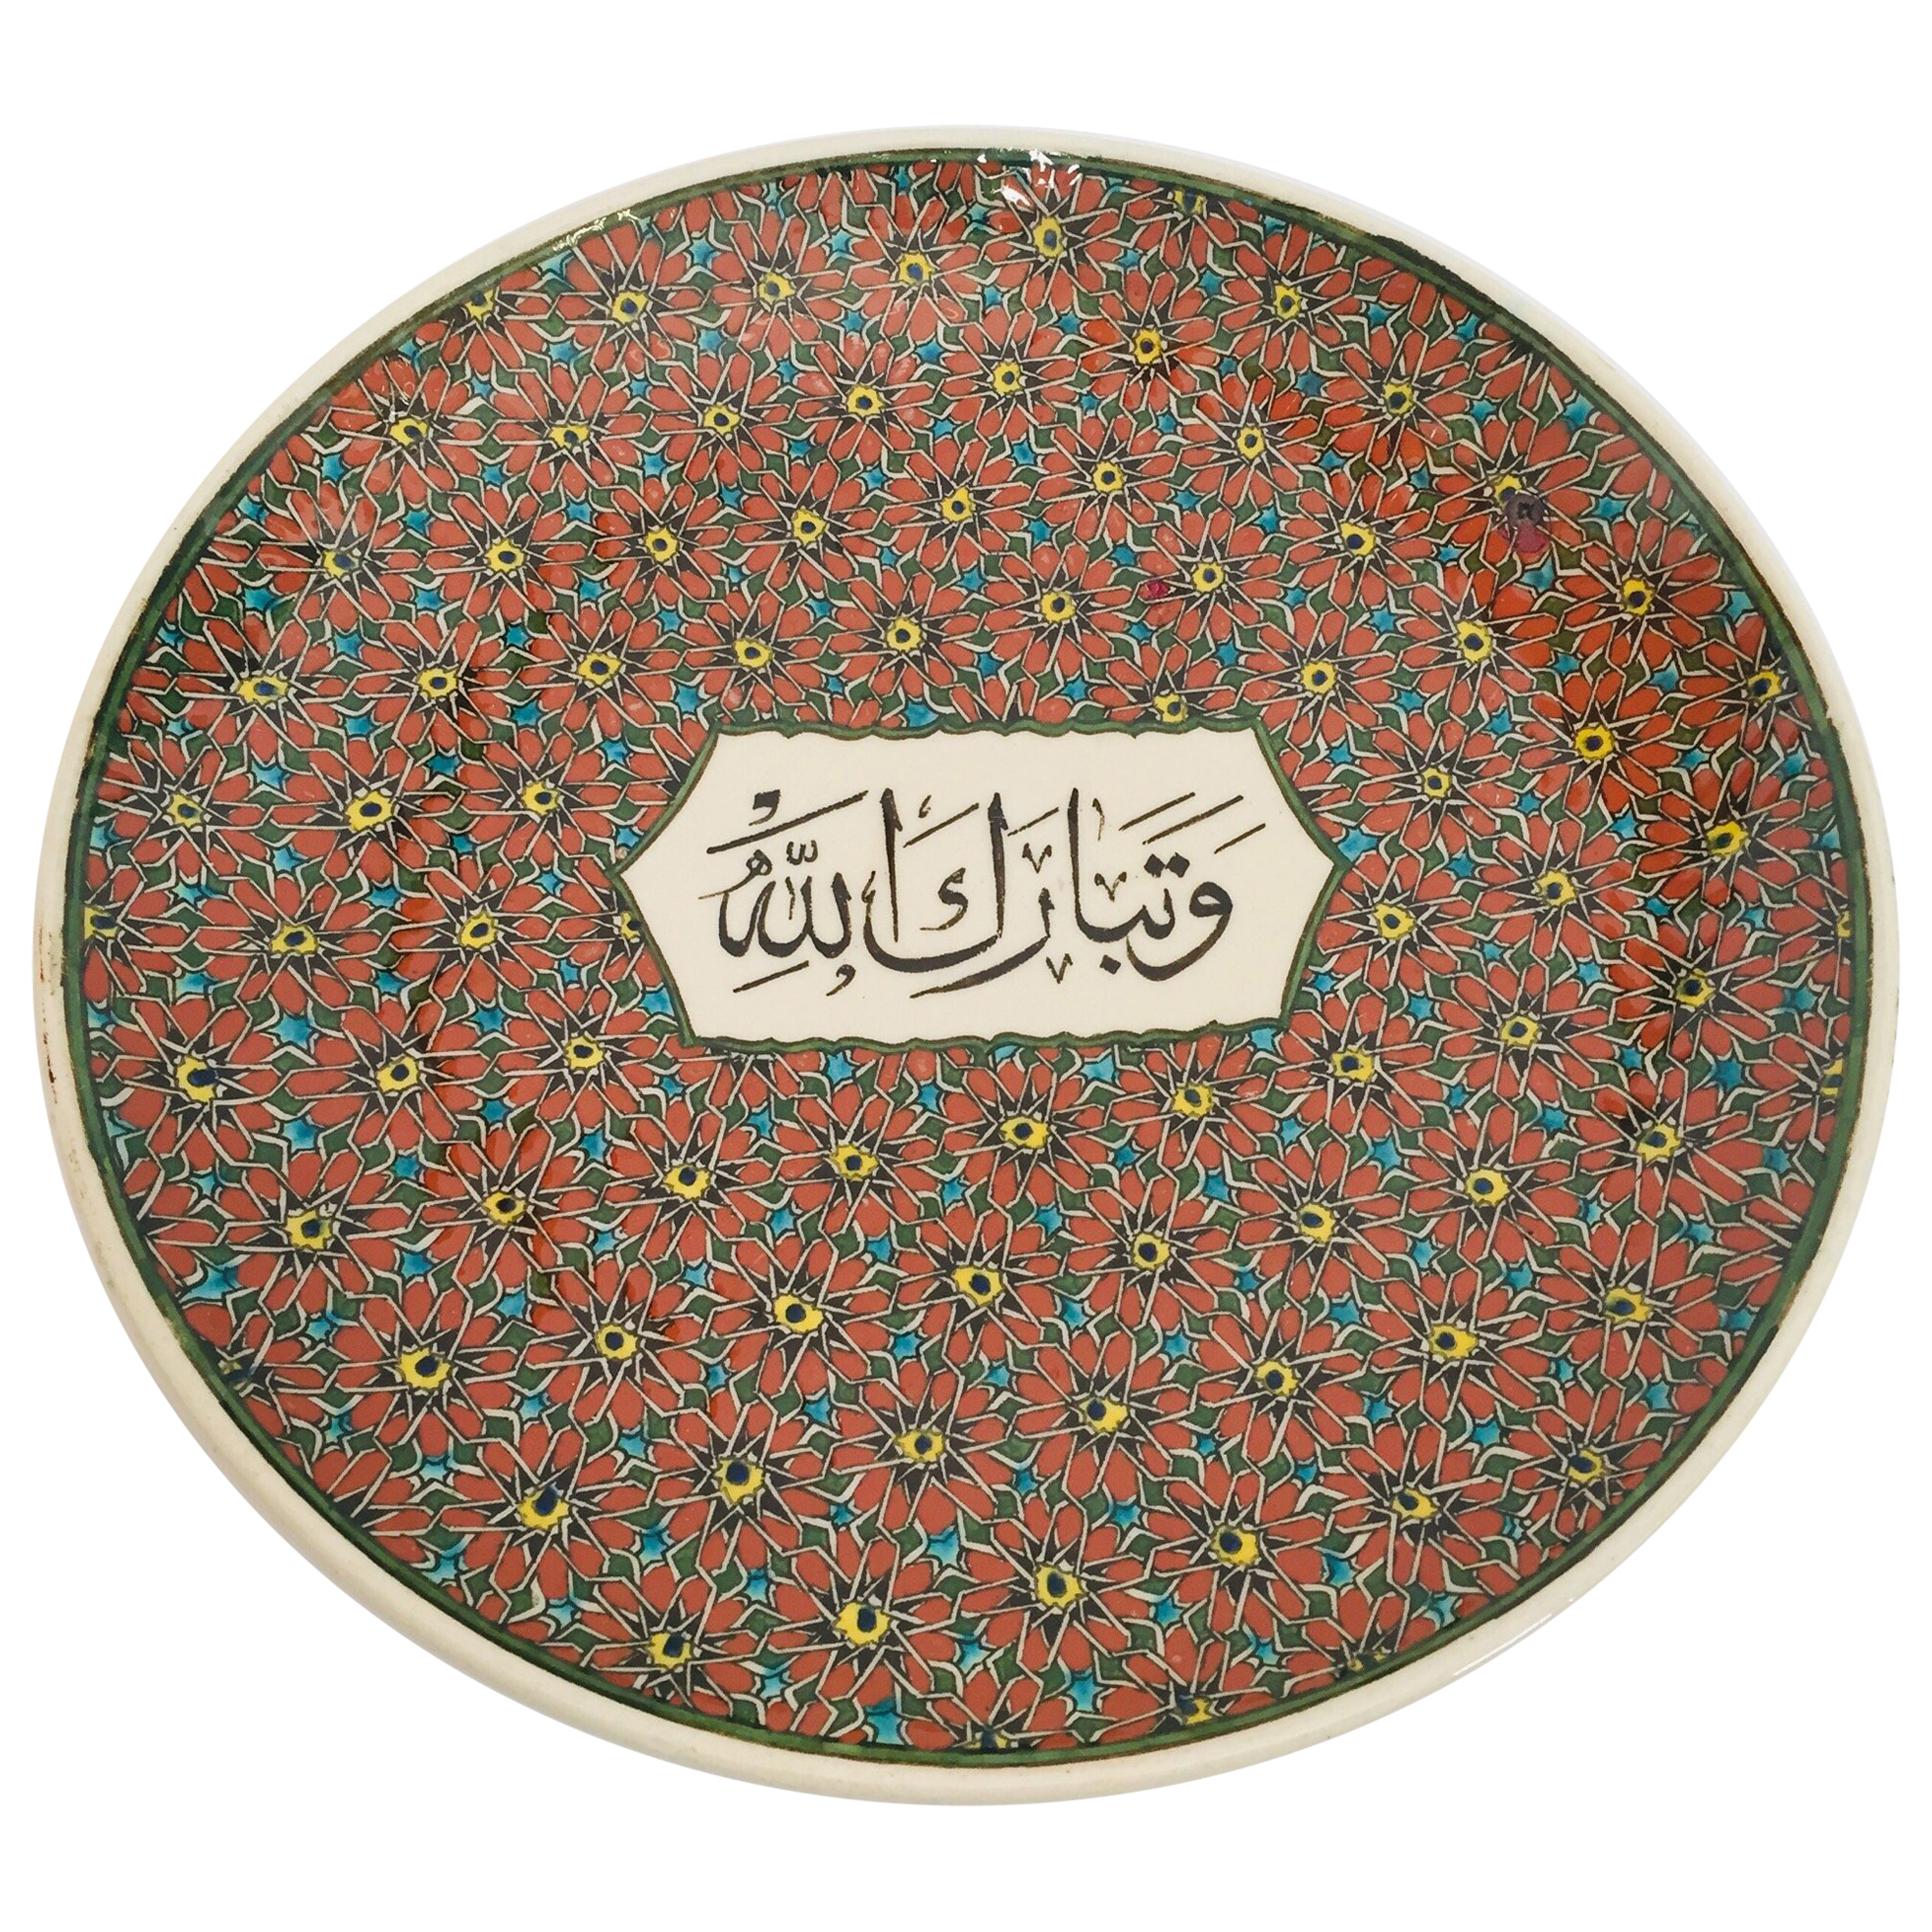 Polychrome handbemalte Keramik dekorative maurische Teller